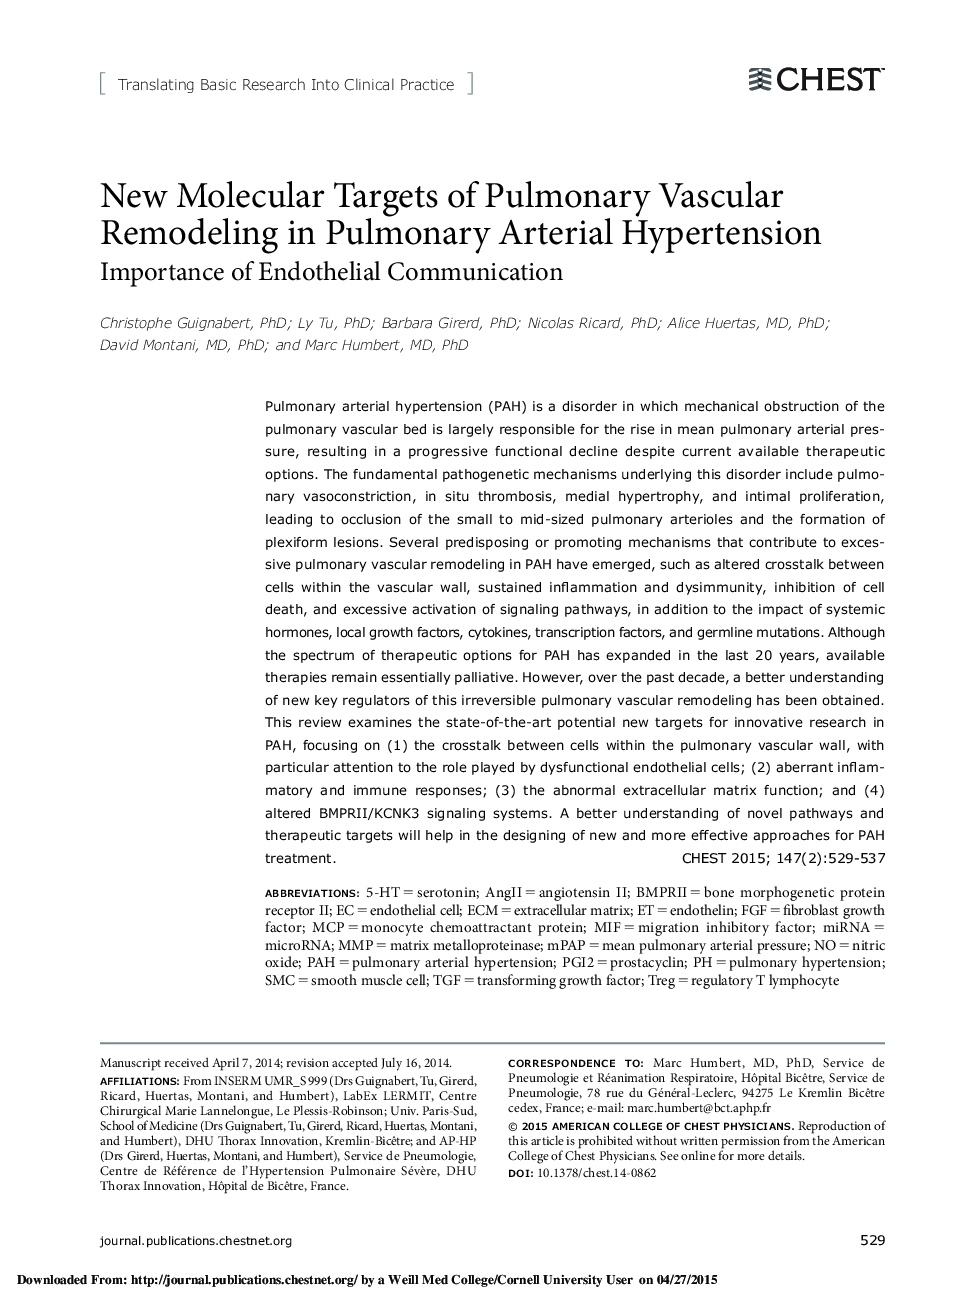 New Molecular Targets of Pulmonary Vascular Remodeling in Pulmonary Arterial Hypertension